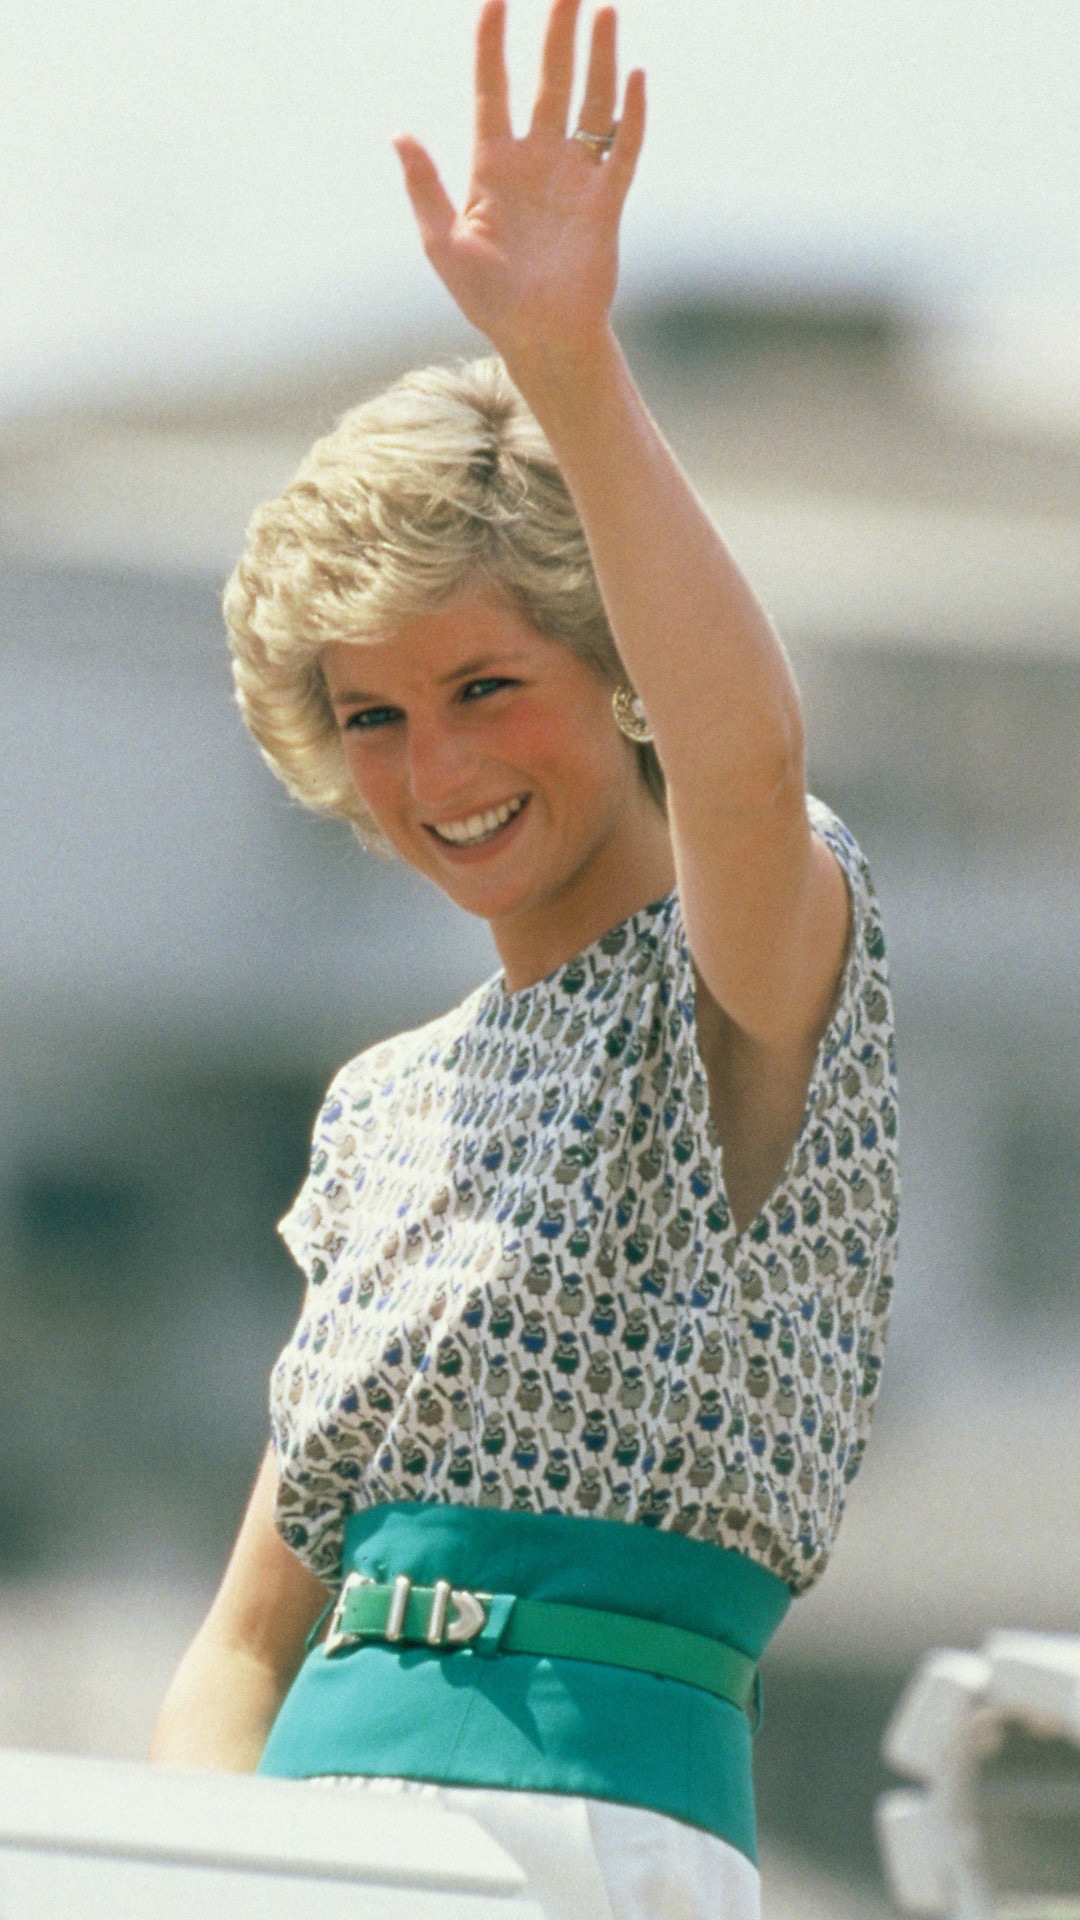 ESC: Princess Diana, Corset Belt